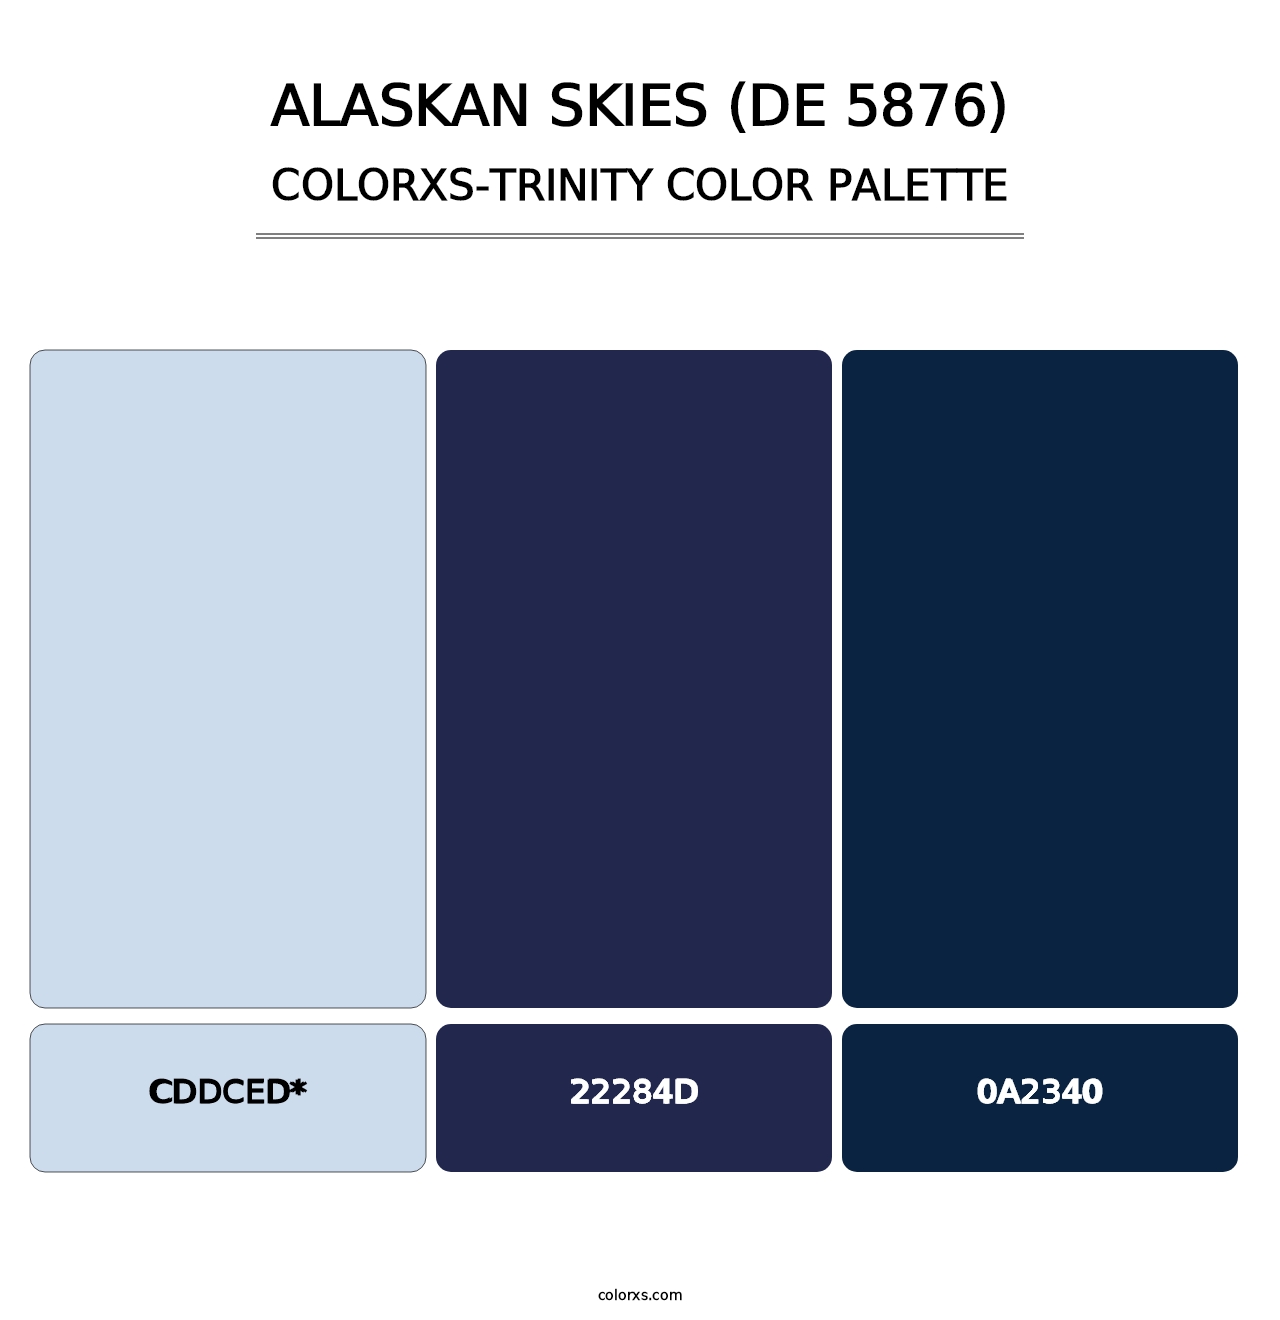 Alaskan Skies (DE 5876) - Colorxs Trinity Palette